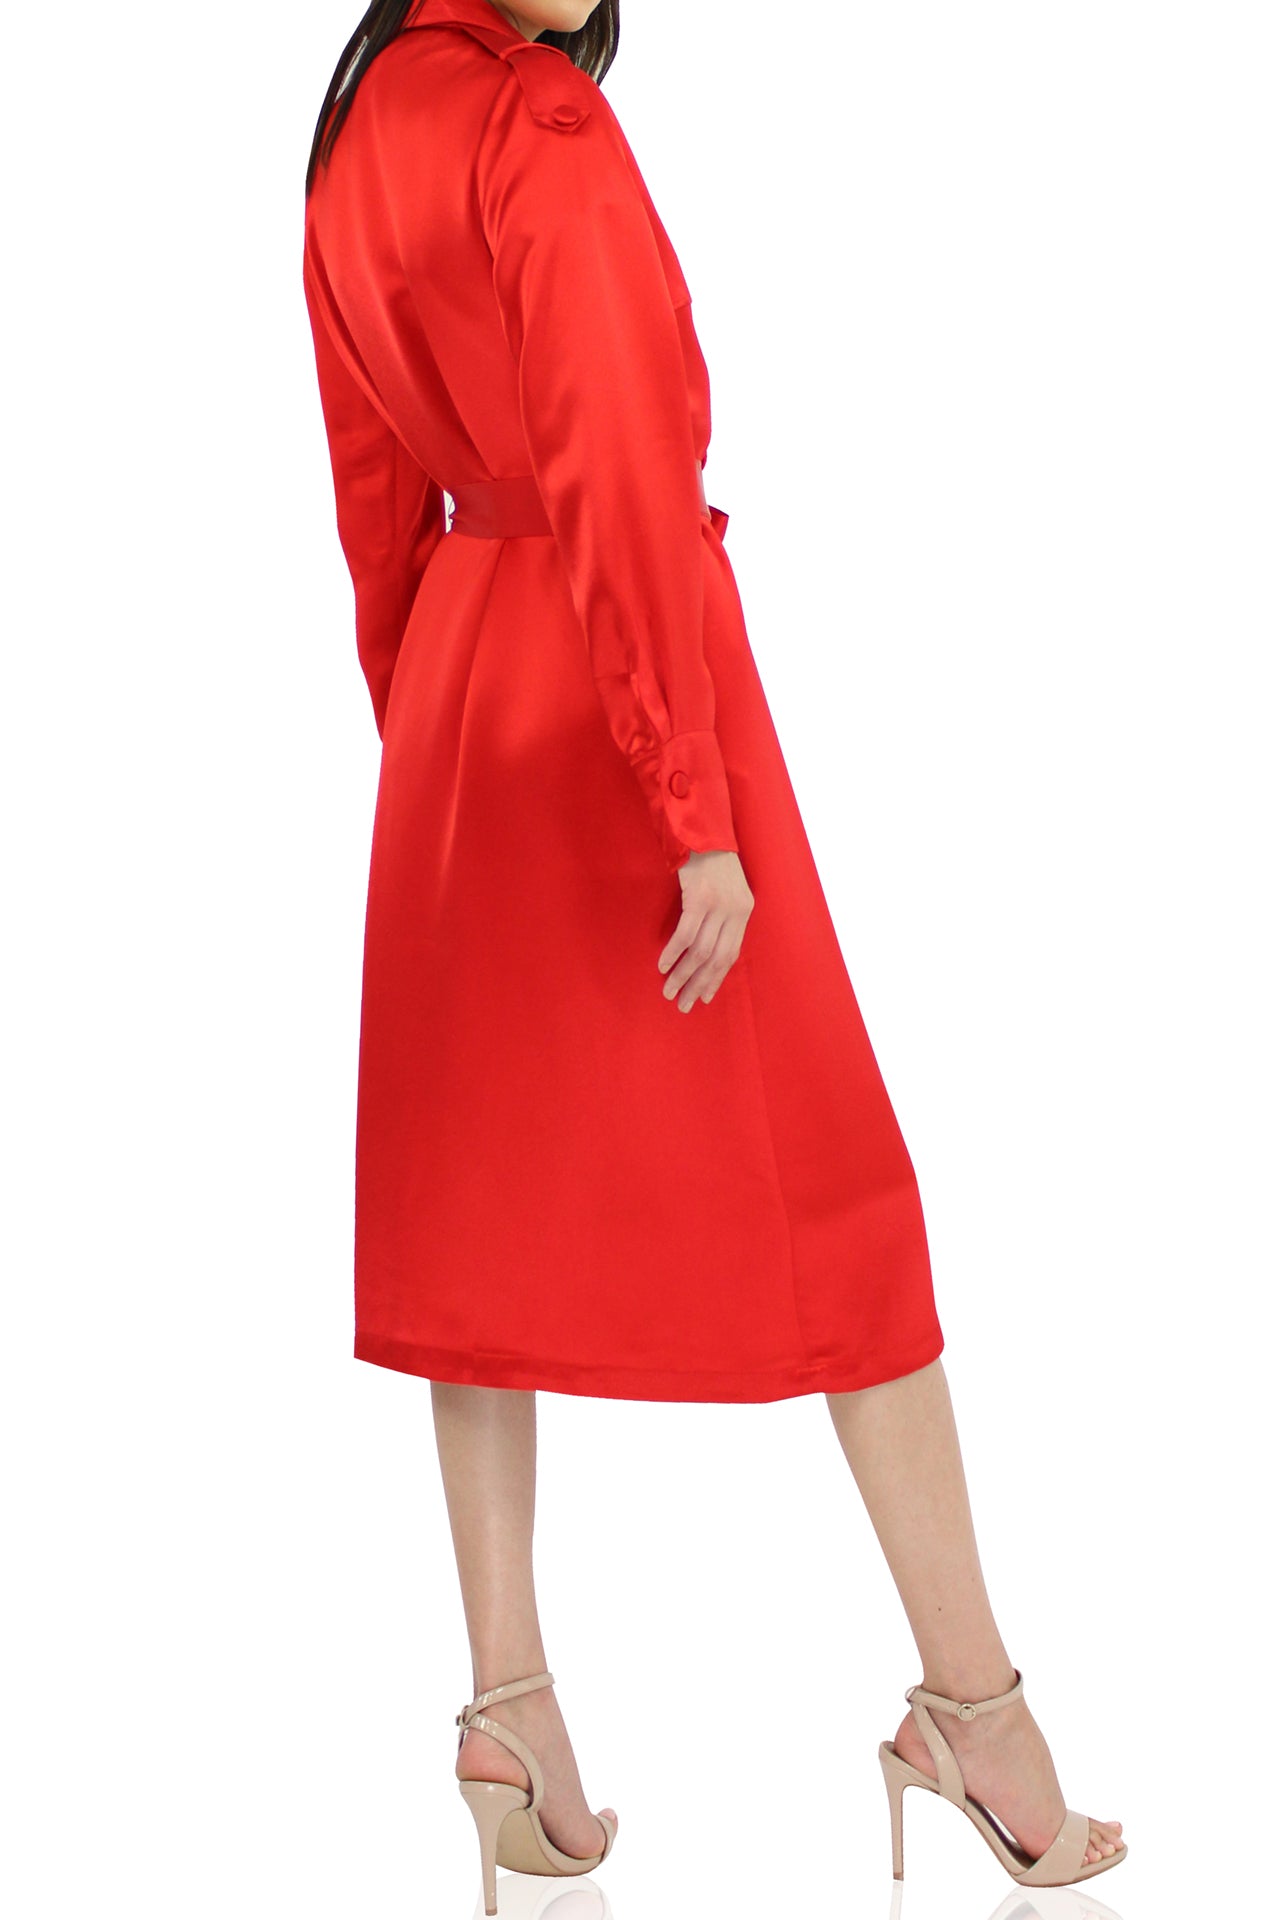 Designer-Red-Robe-Dress-By-Kyle